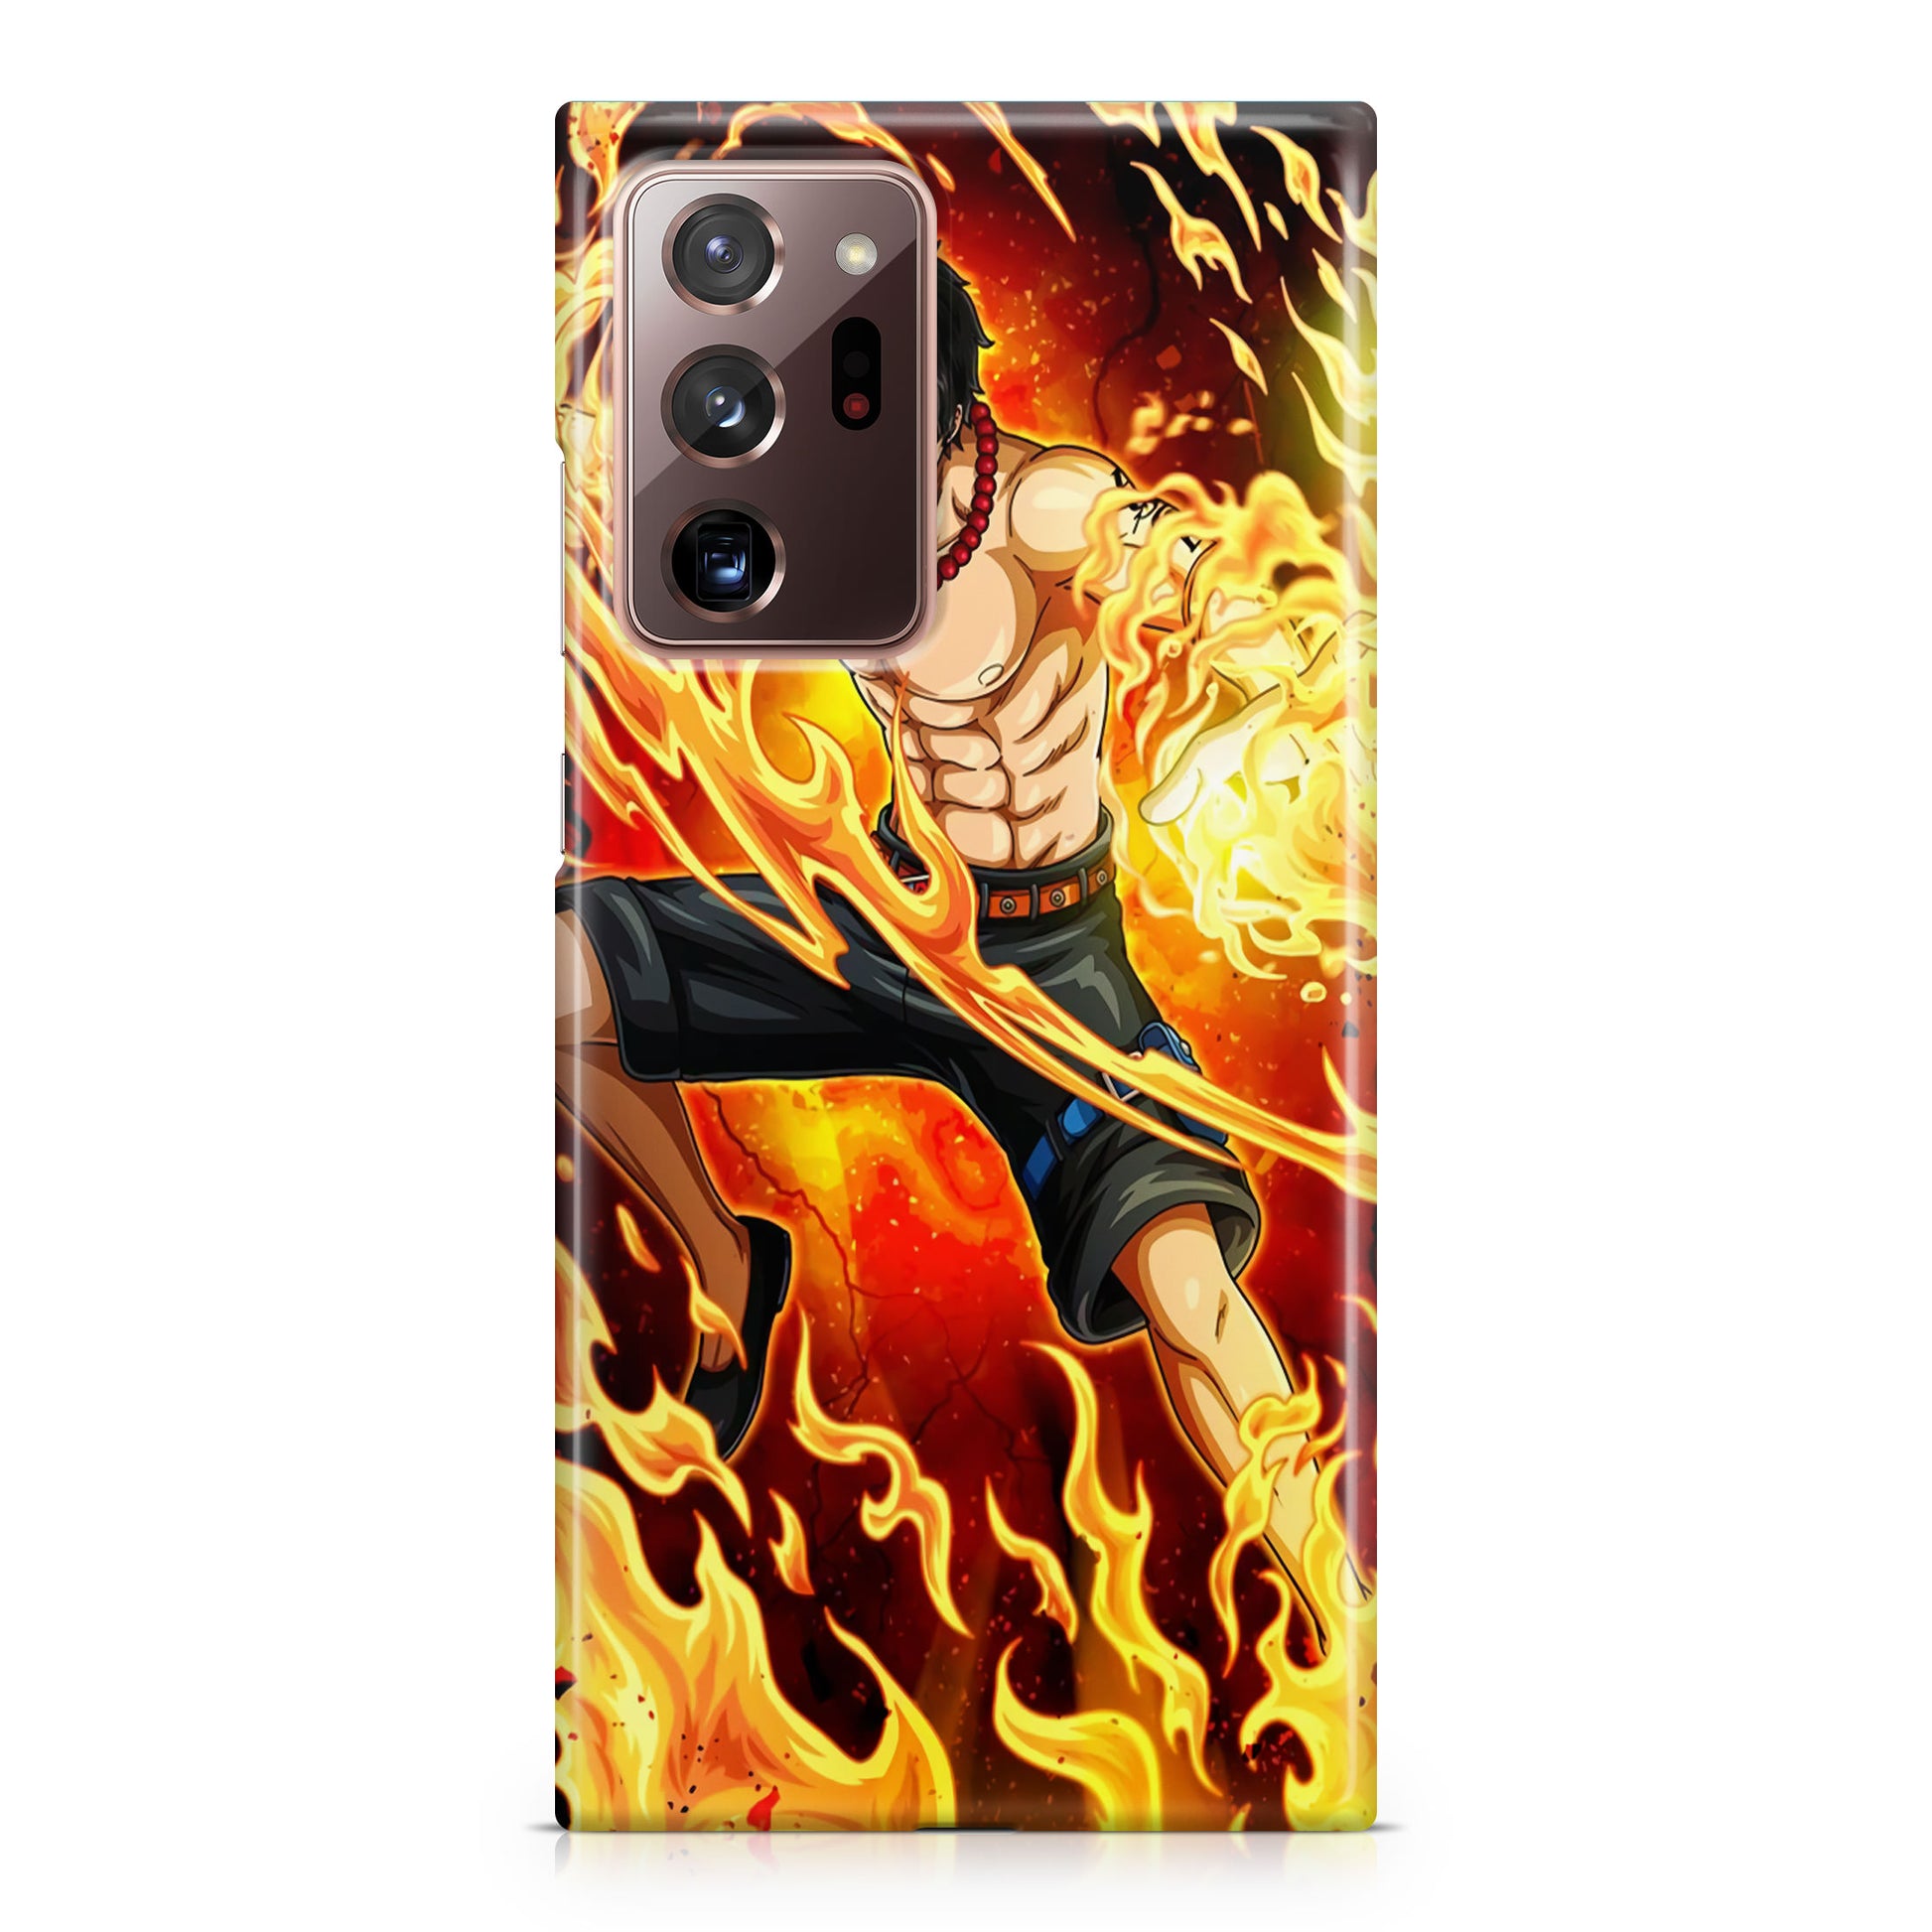 Ace Fire Fist Galaxy Note 20 Ultra Case